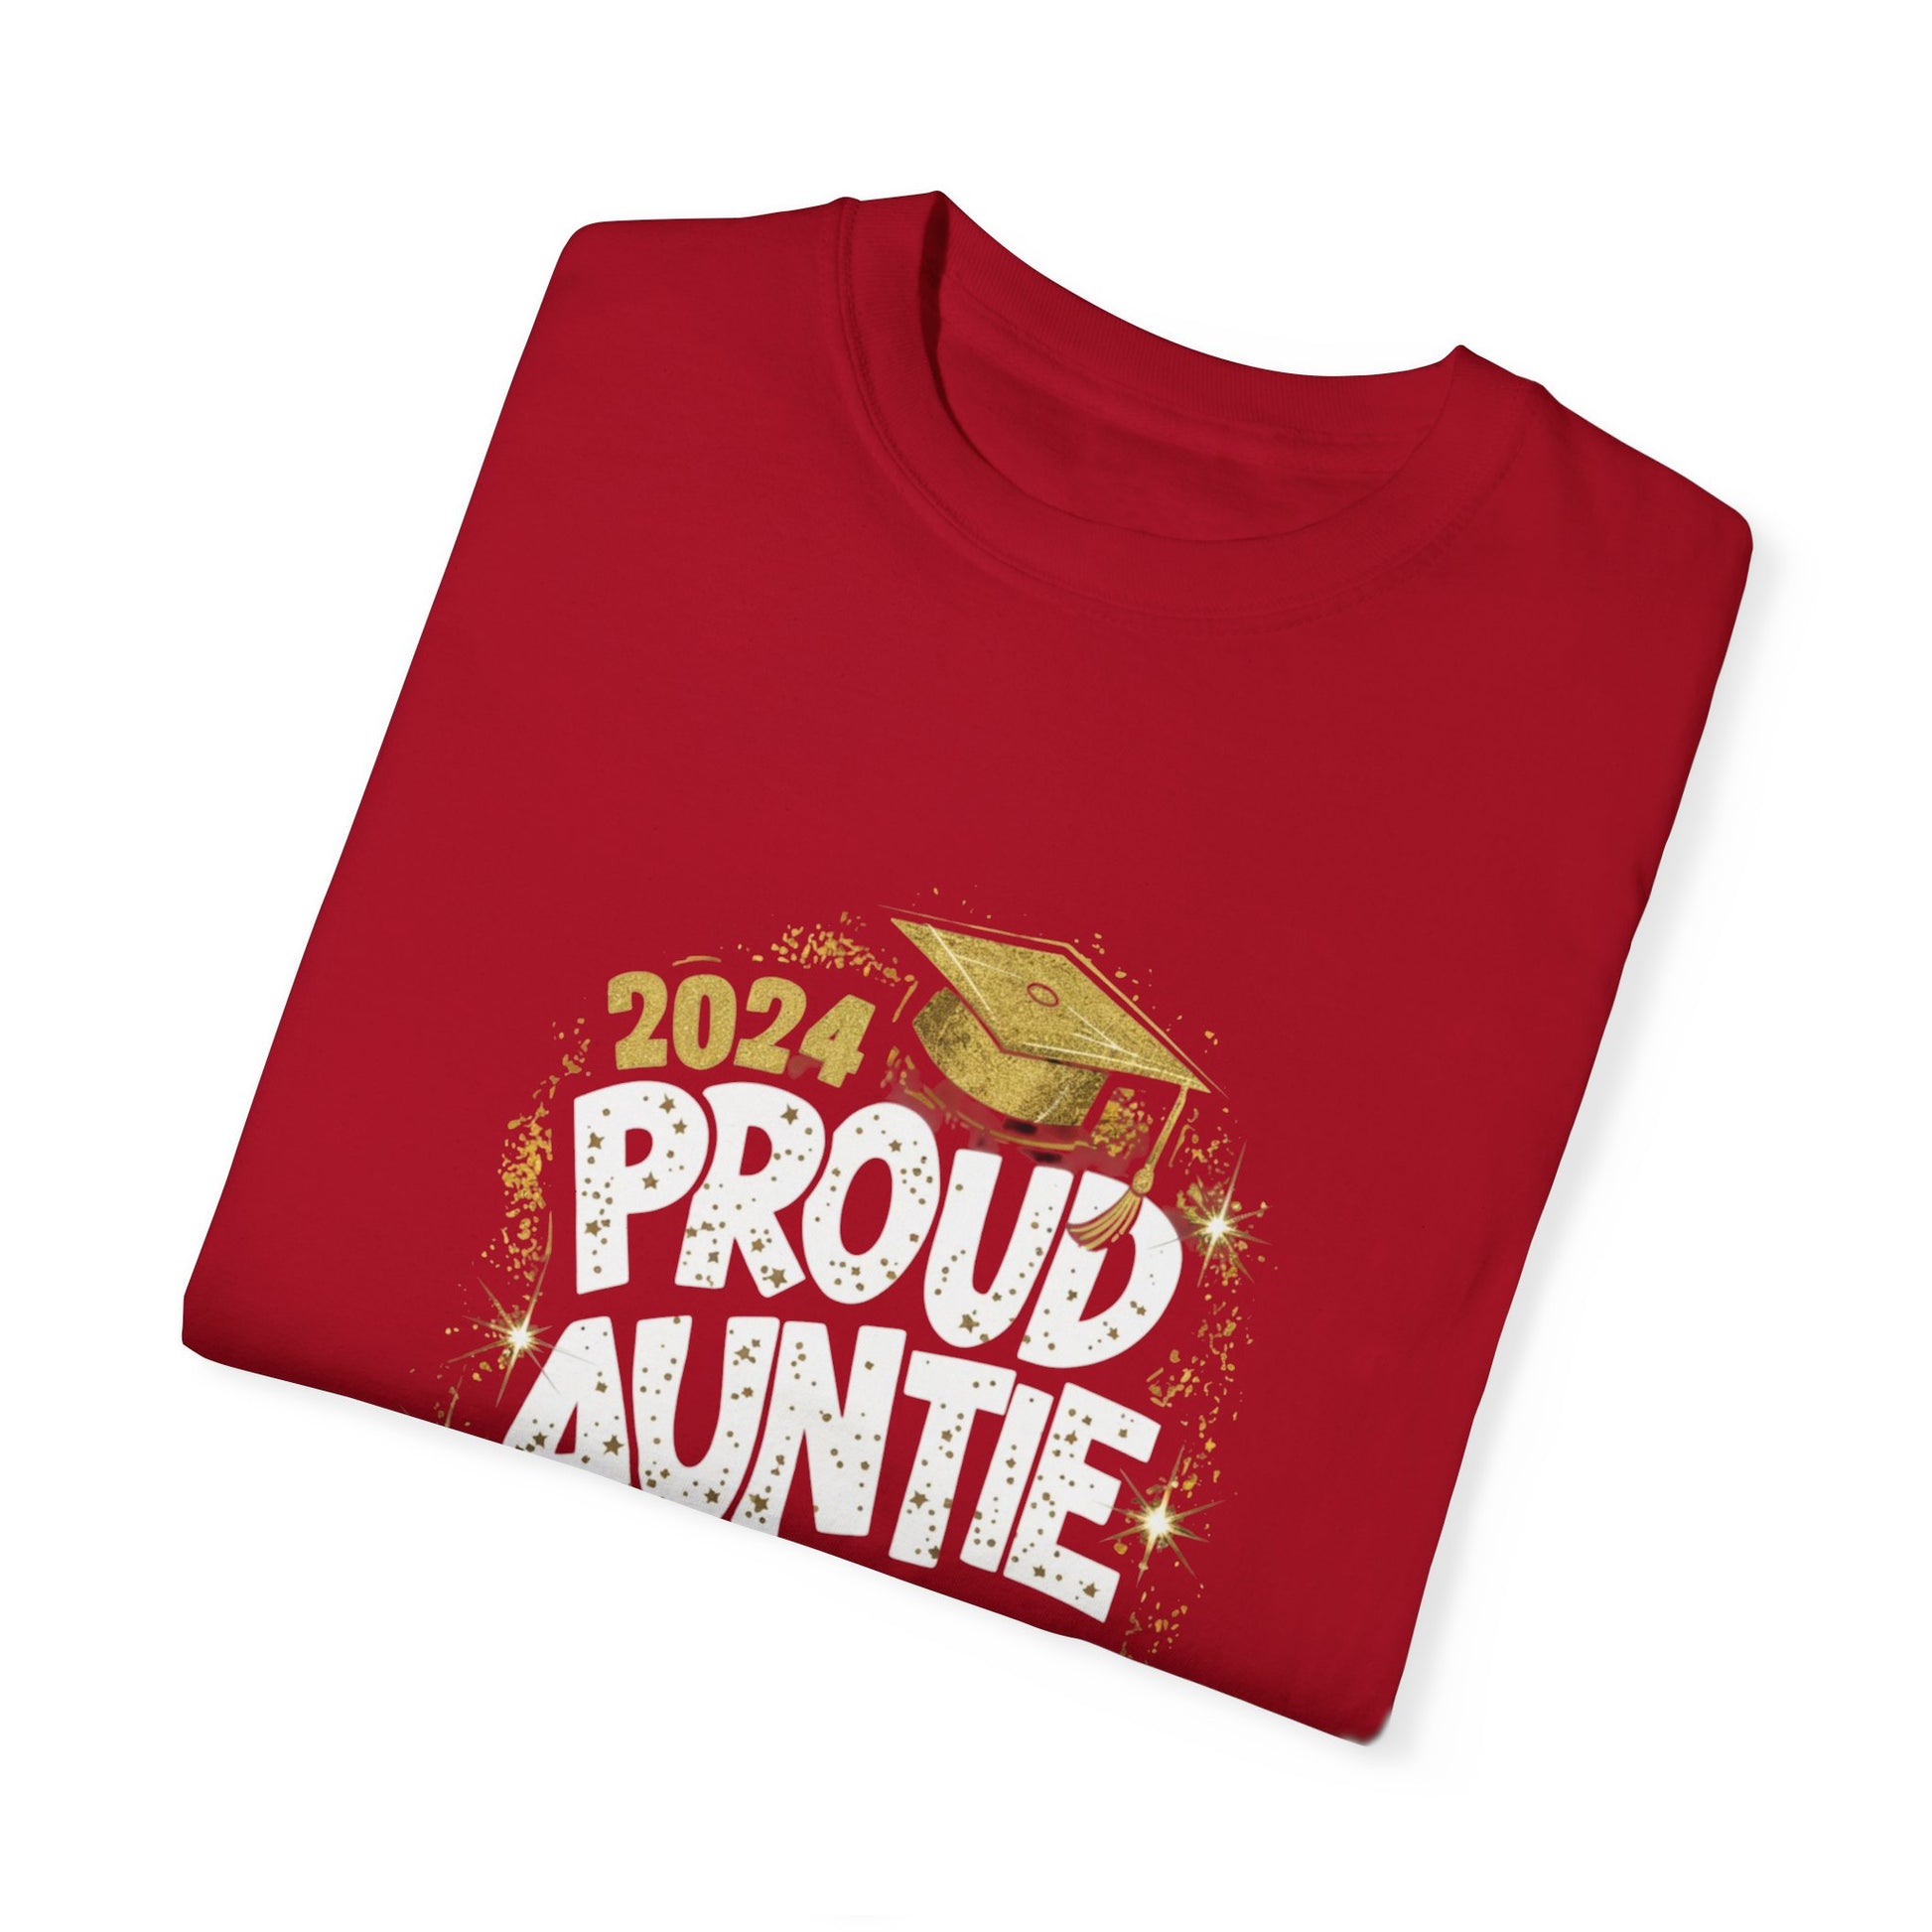 Proud Auntie of a 2024 Graduate Unisex Garment-dyed T-shirt Cotton Funny Humorous Graphic Soft Premium Unisex Men Women Red T-shirt Birthday Gift-20